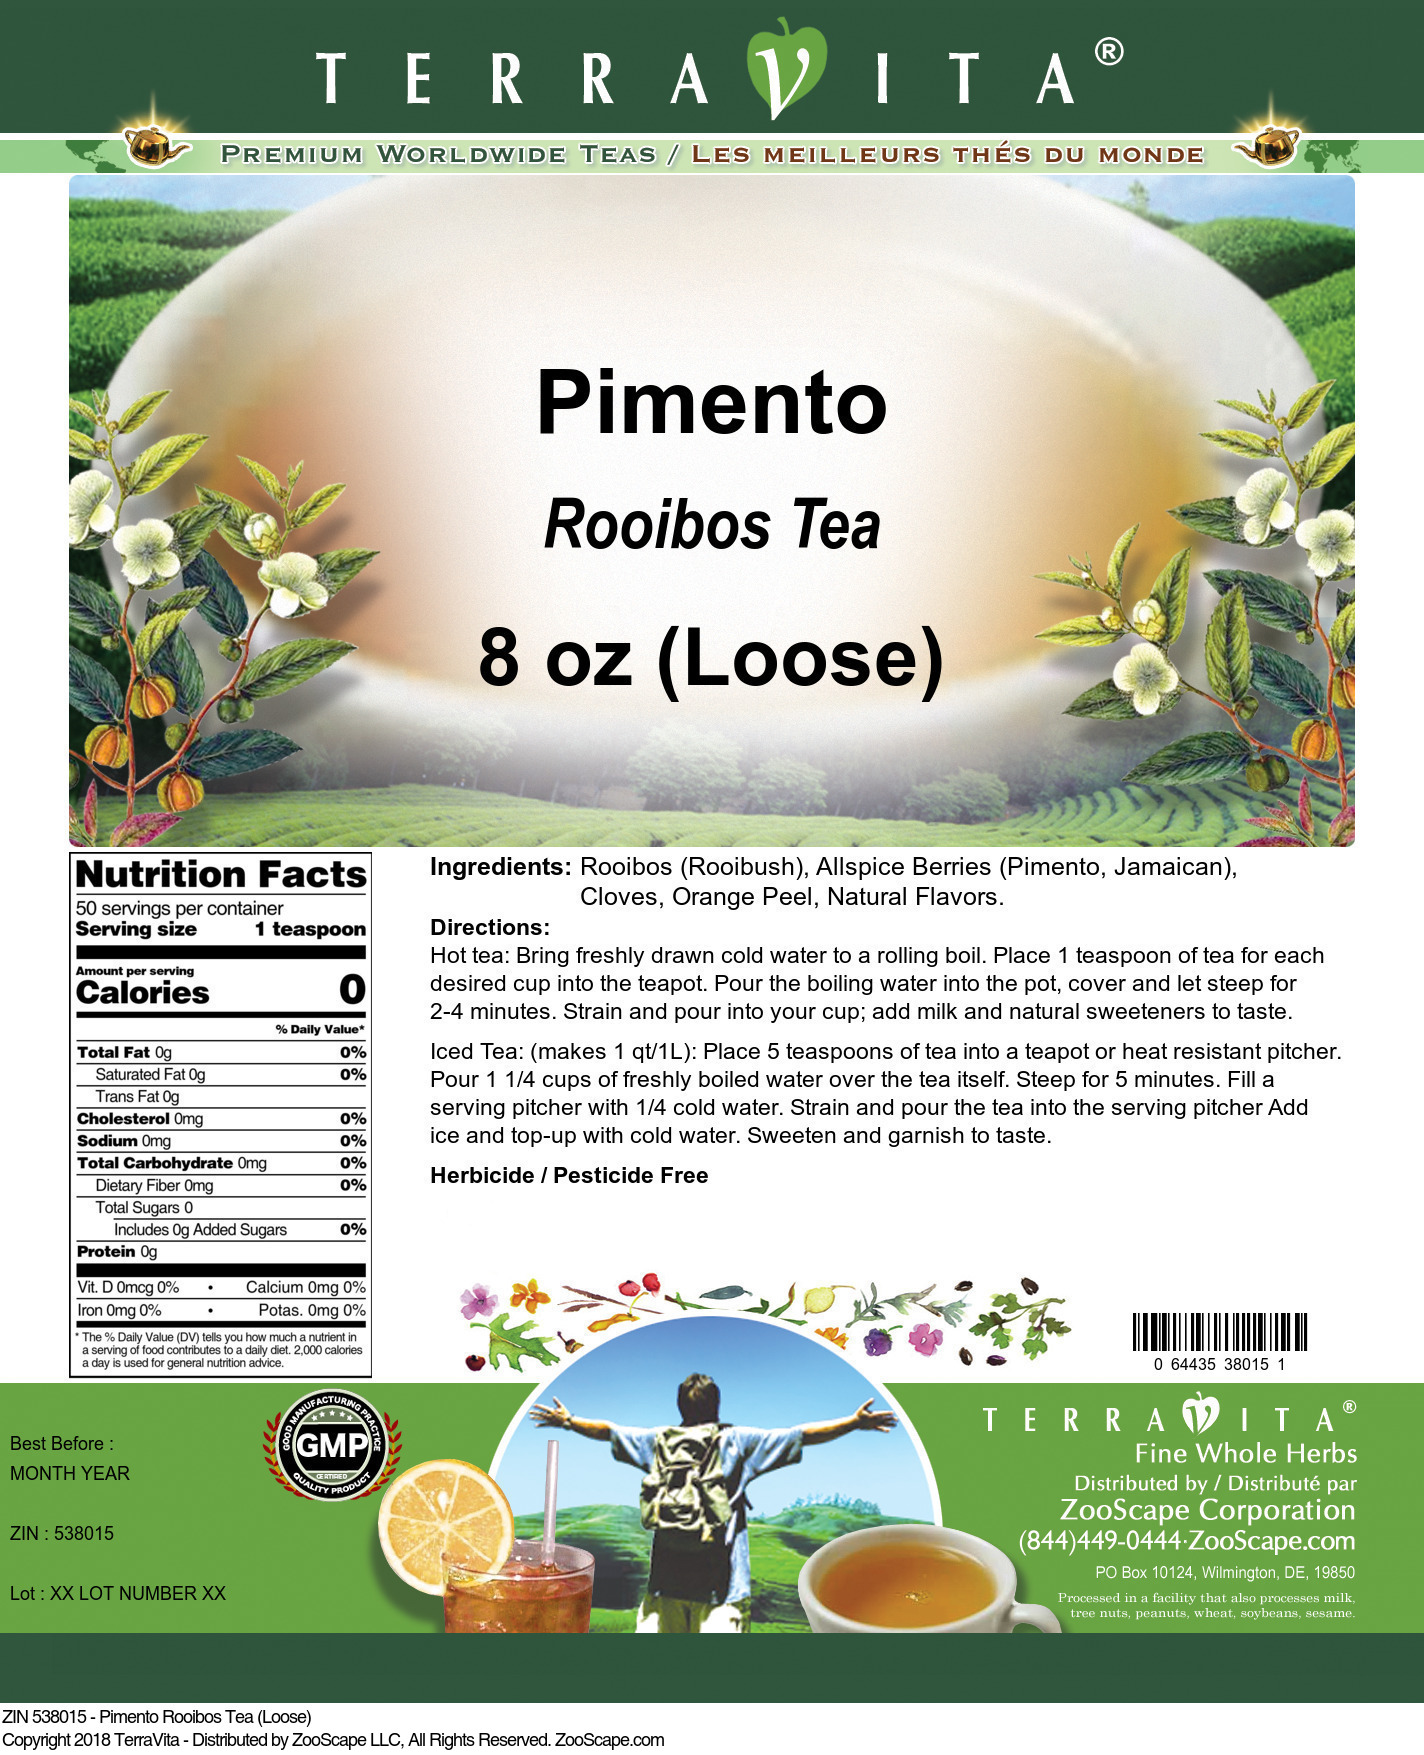 Pimento Rooibos Tea (Loose) - Label